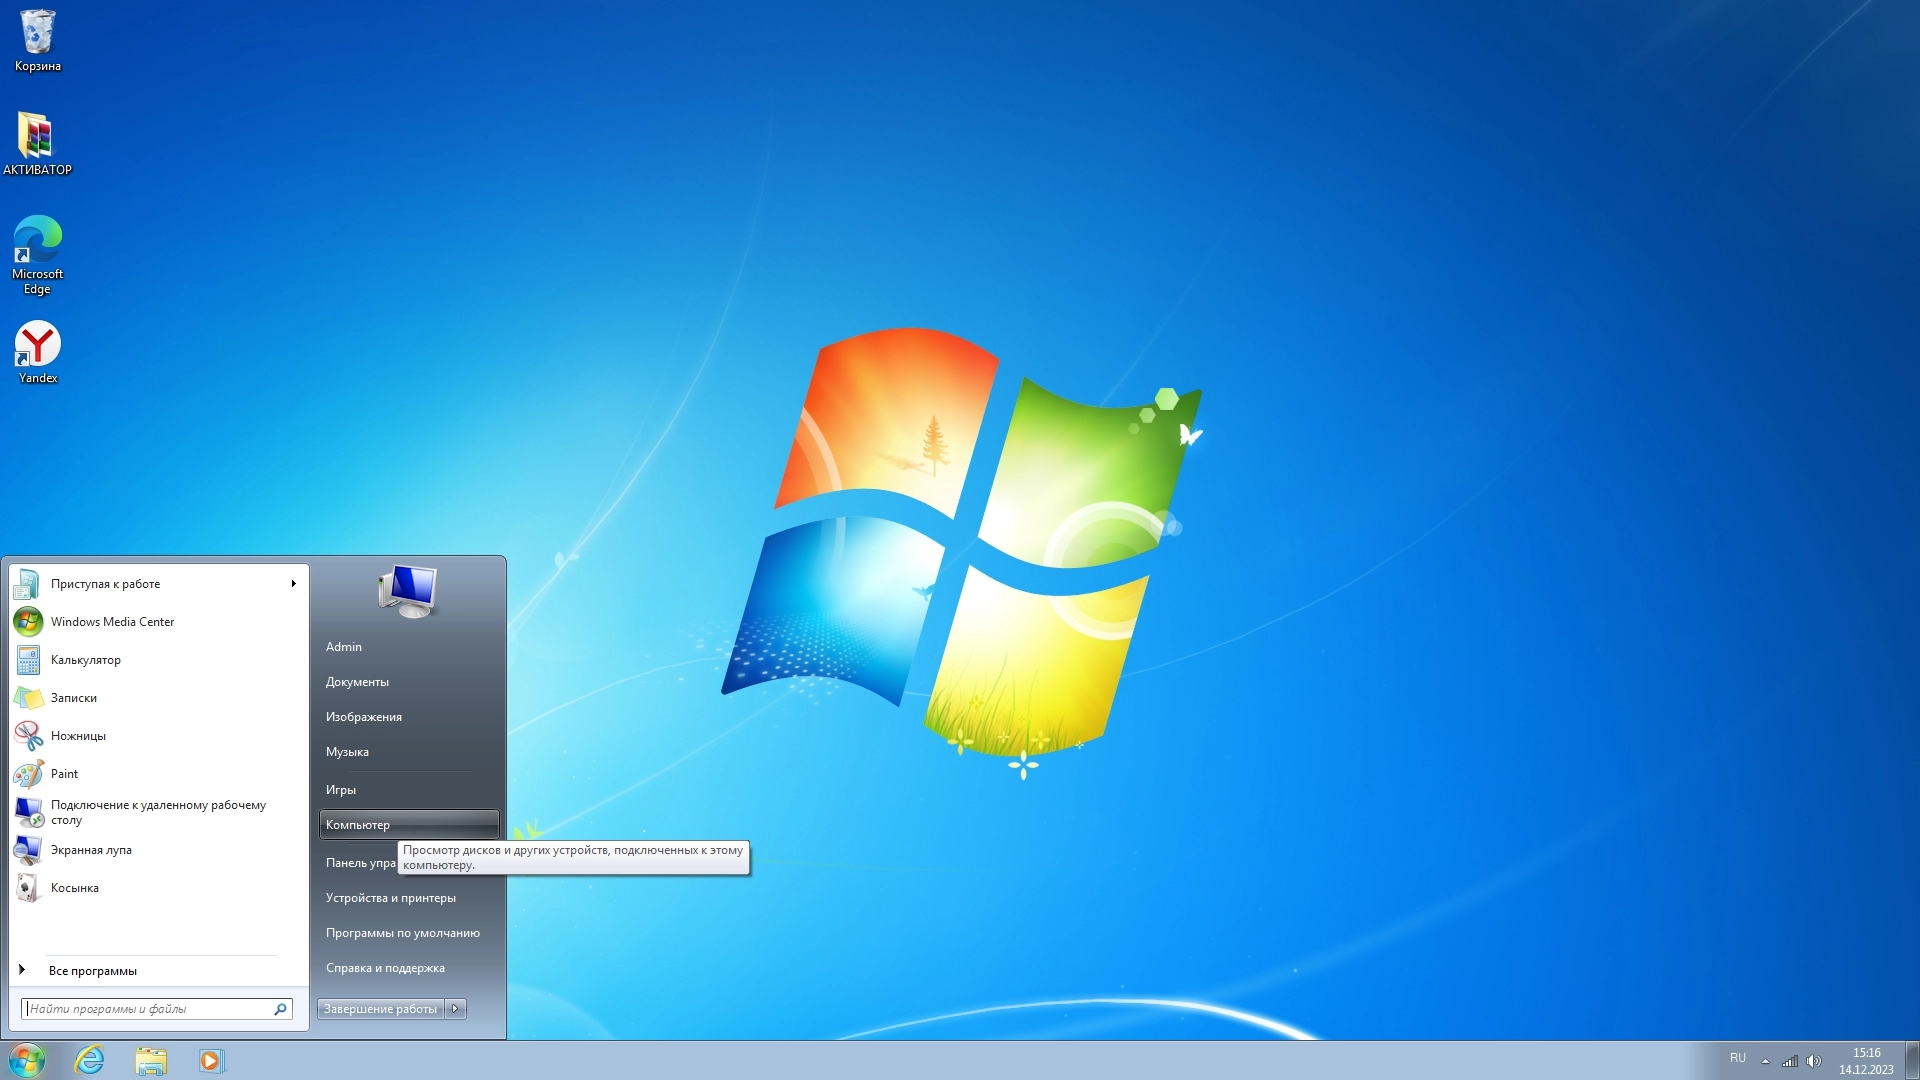 Windows 7 Ultimate x64 Update December 2023